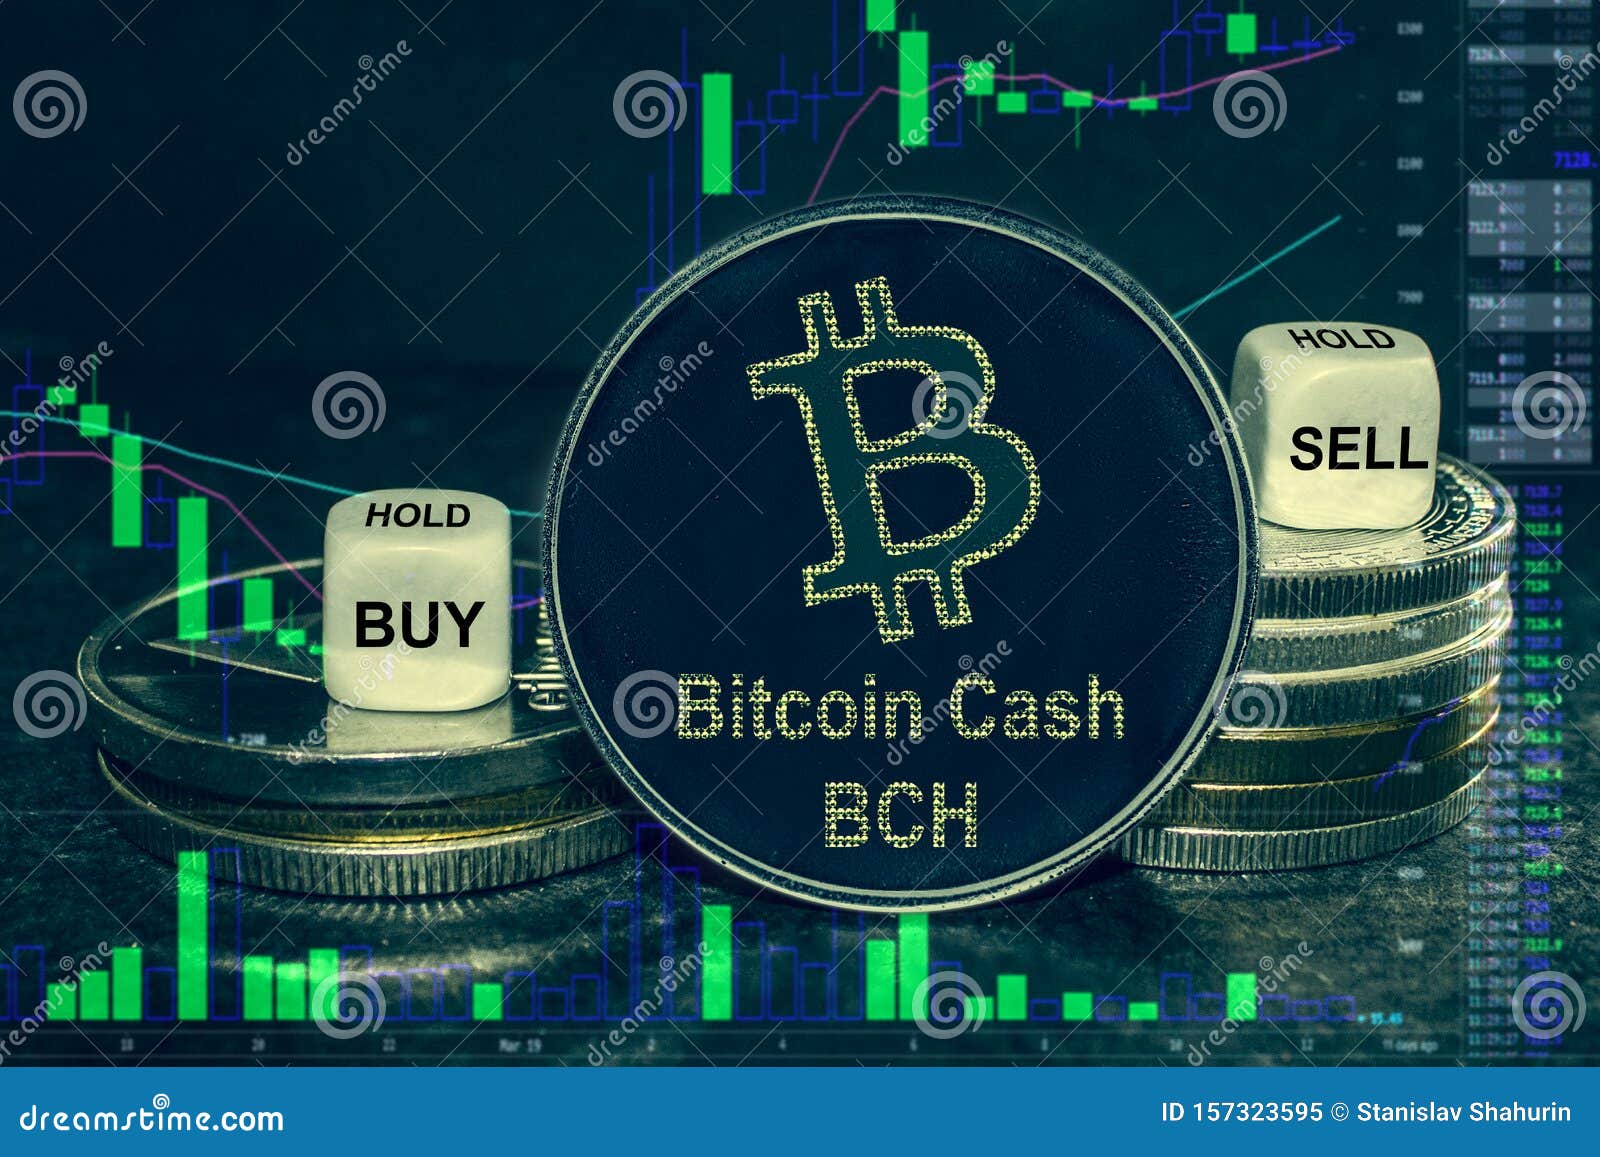 Bitcoin cash exchange list 0.06309658 btc to usd